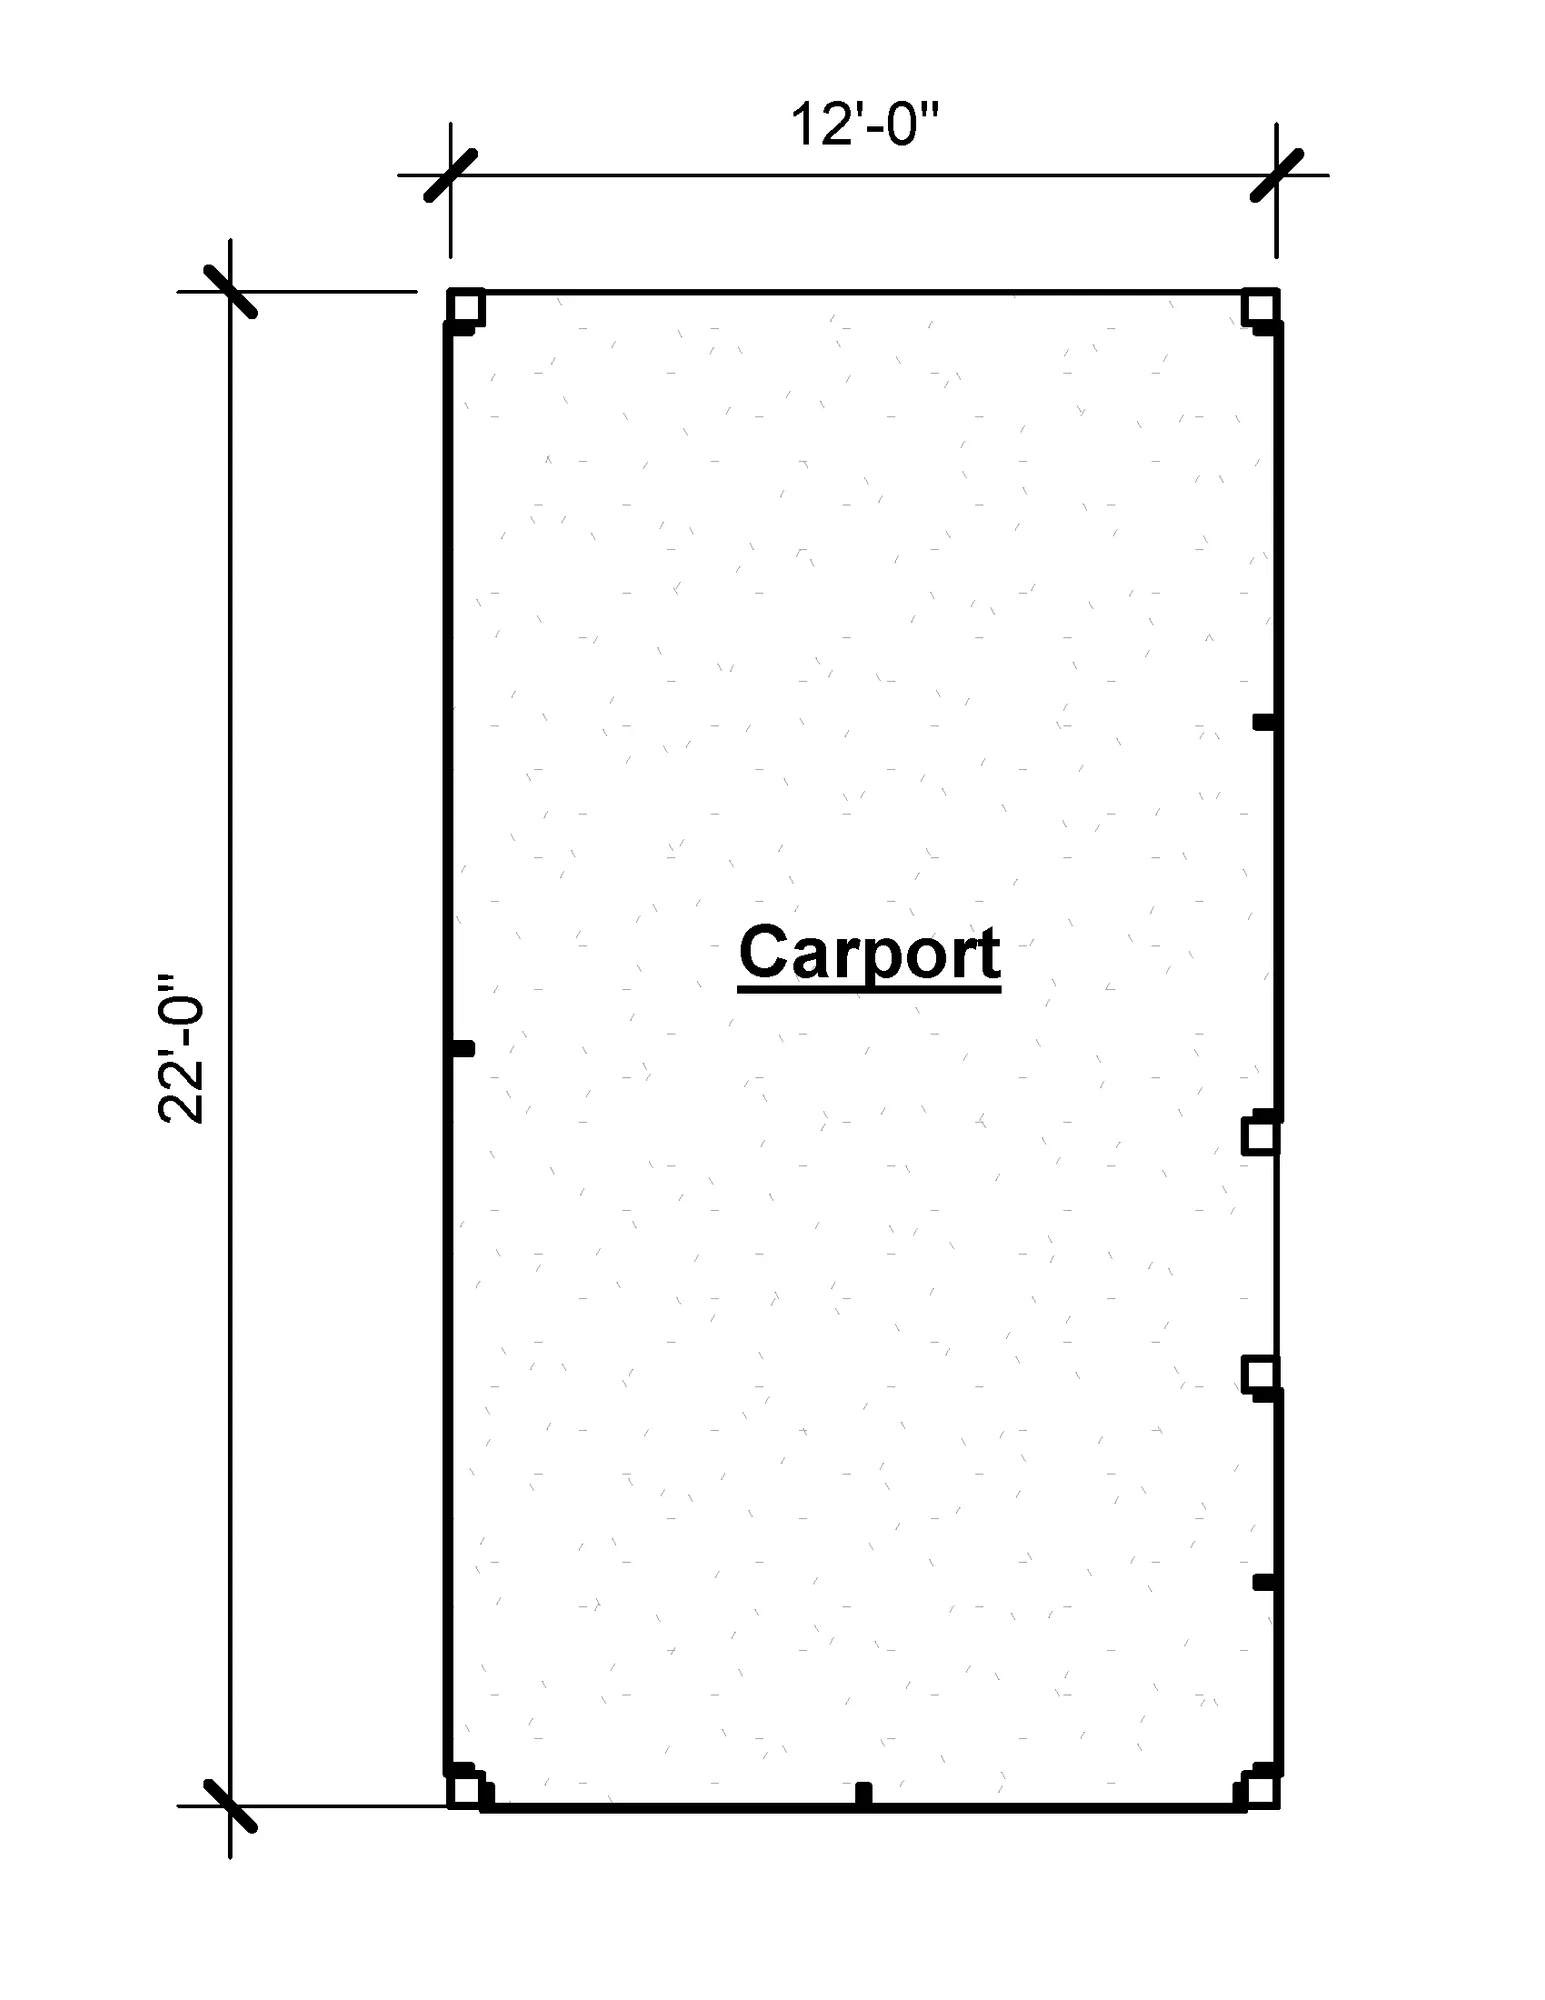 Carport - undefined